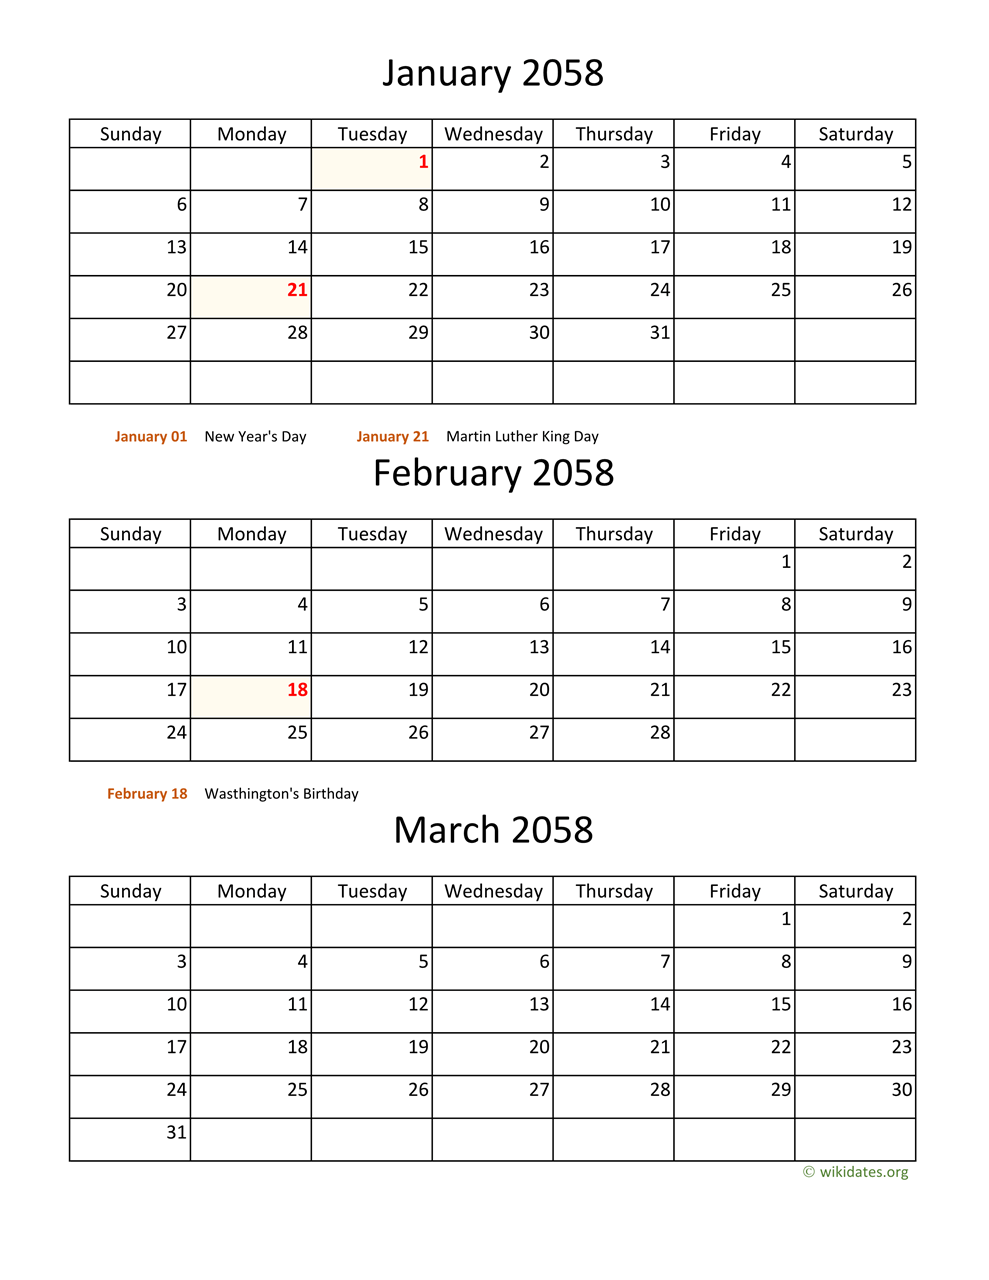 printable-2058-calendar-wikidates